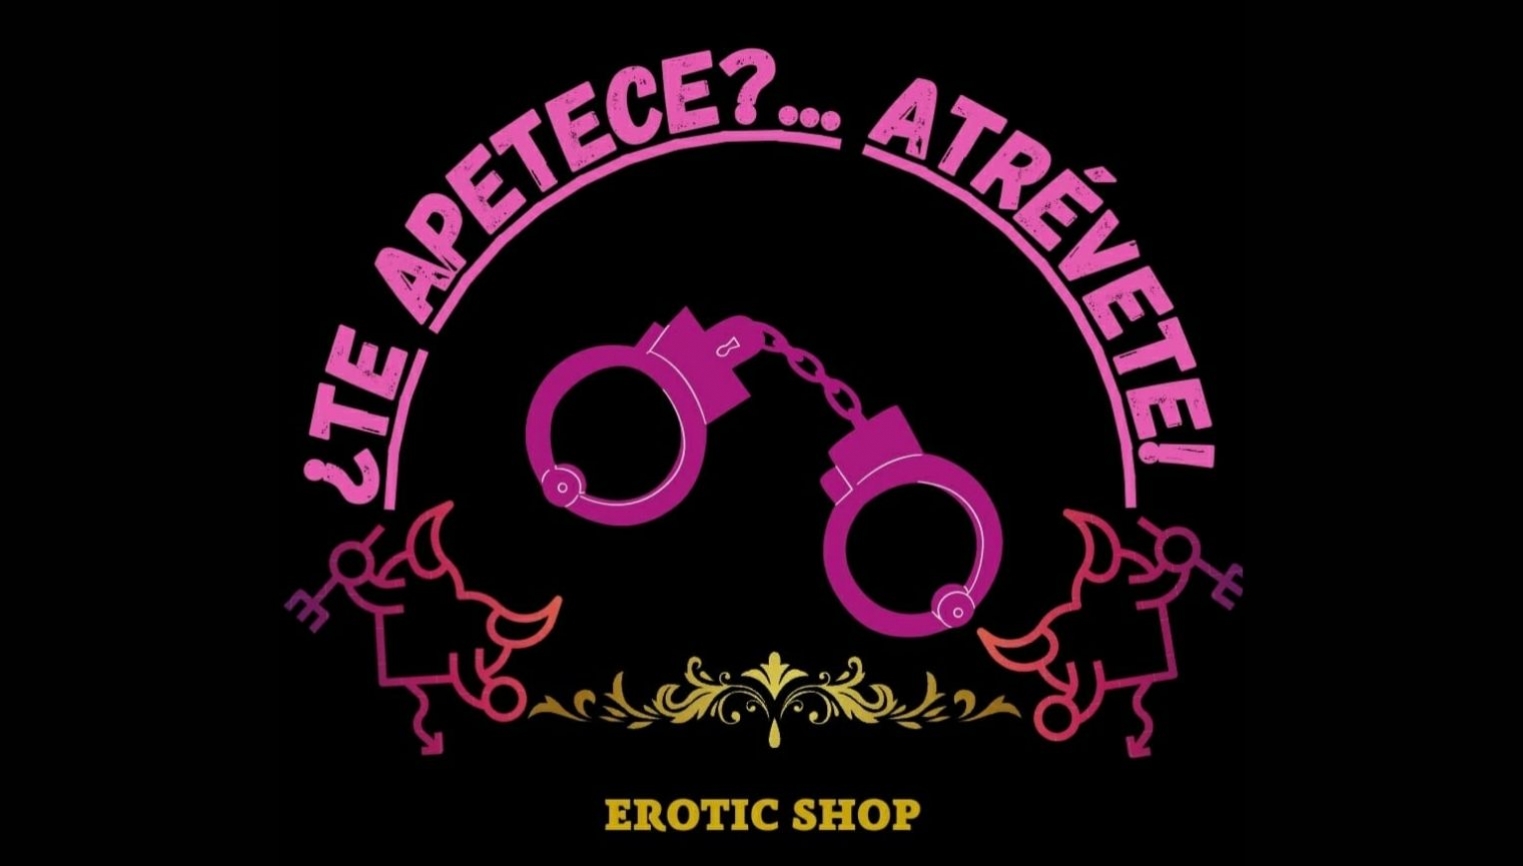 Te apetece atrévete - Erotic shop - foto 1/2